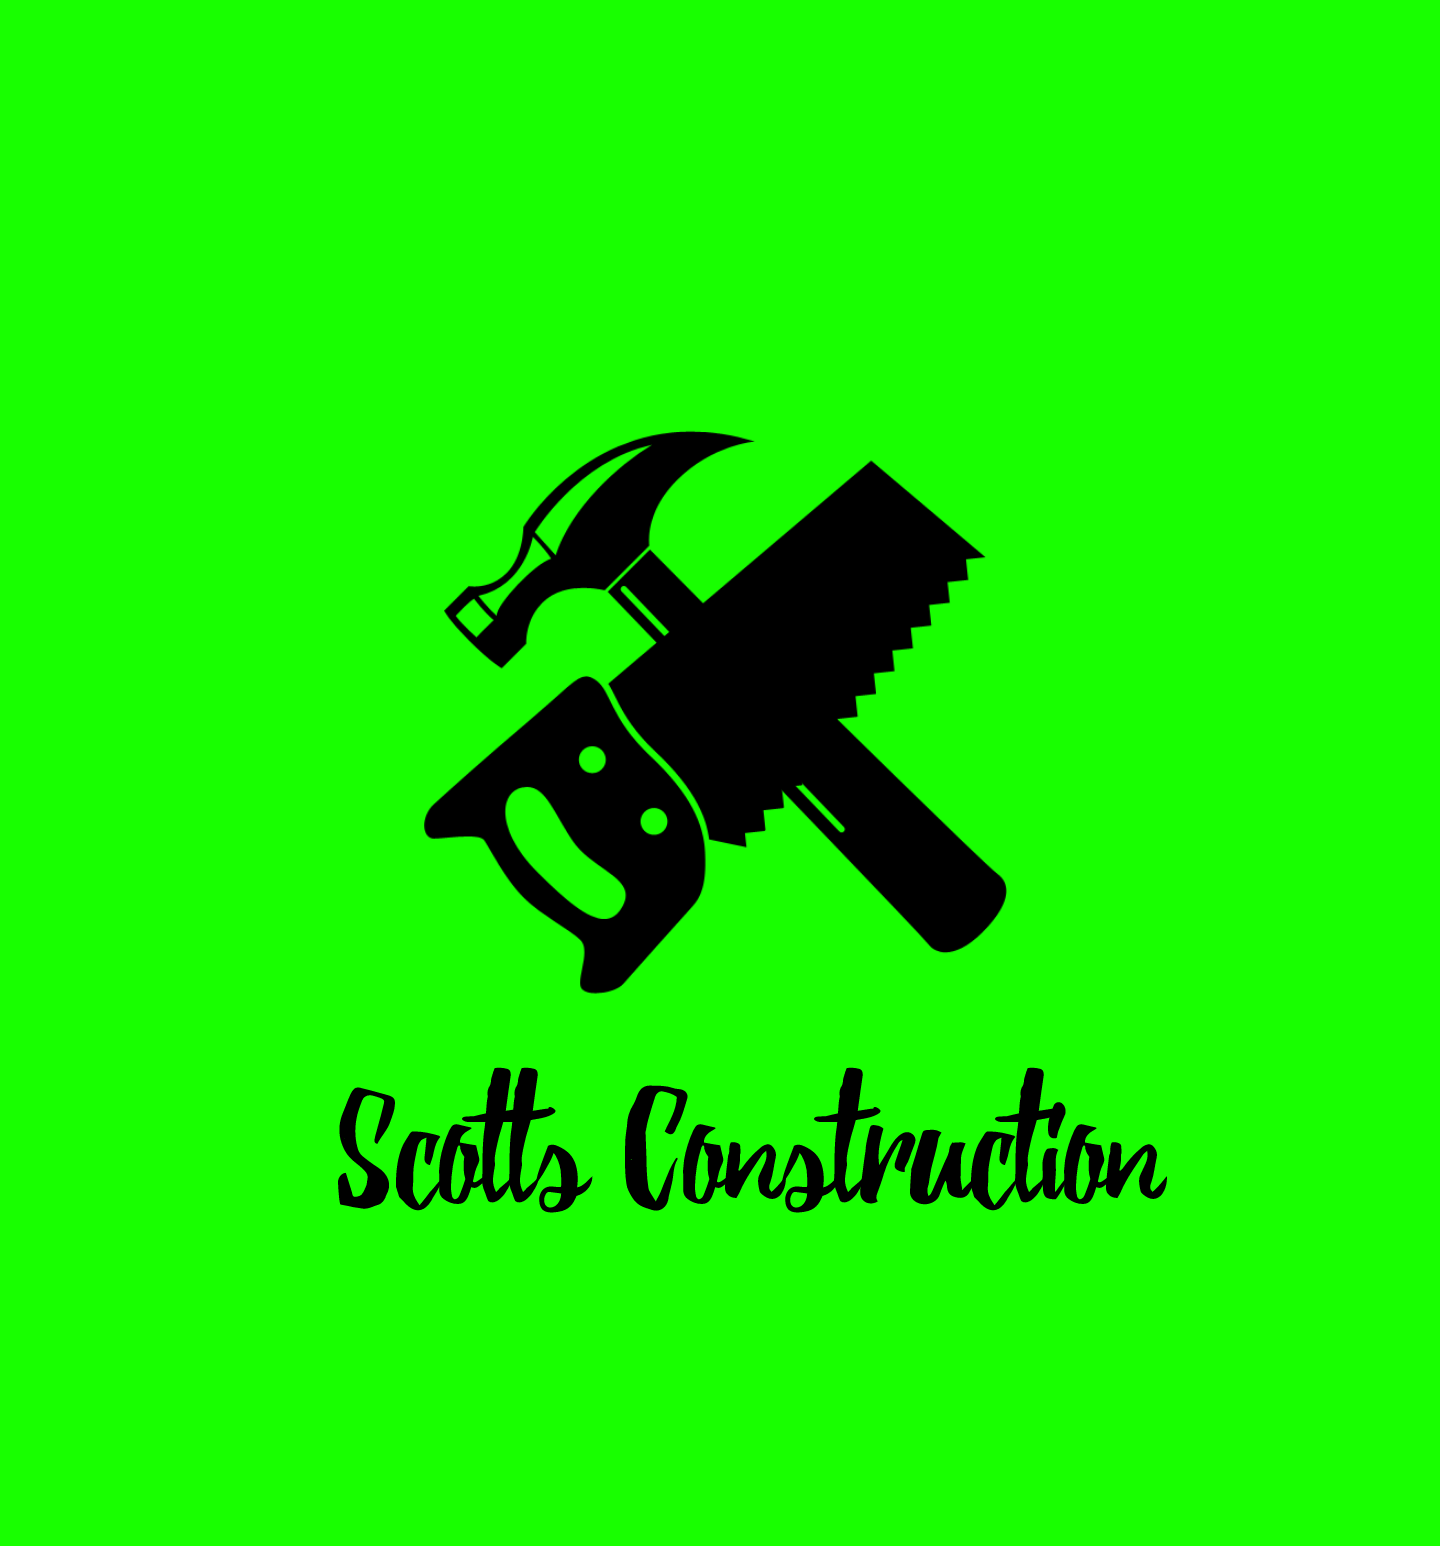 Scott's Construction Logo